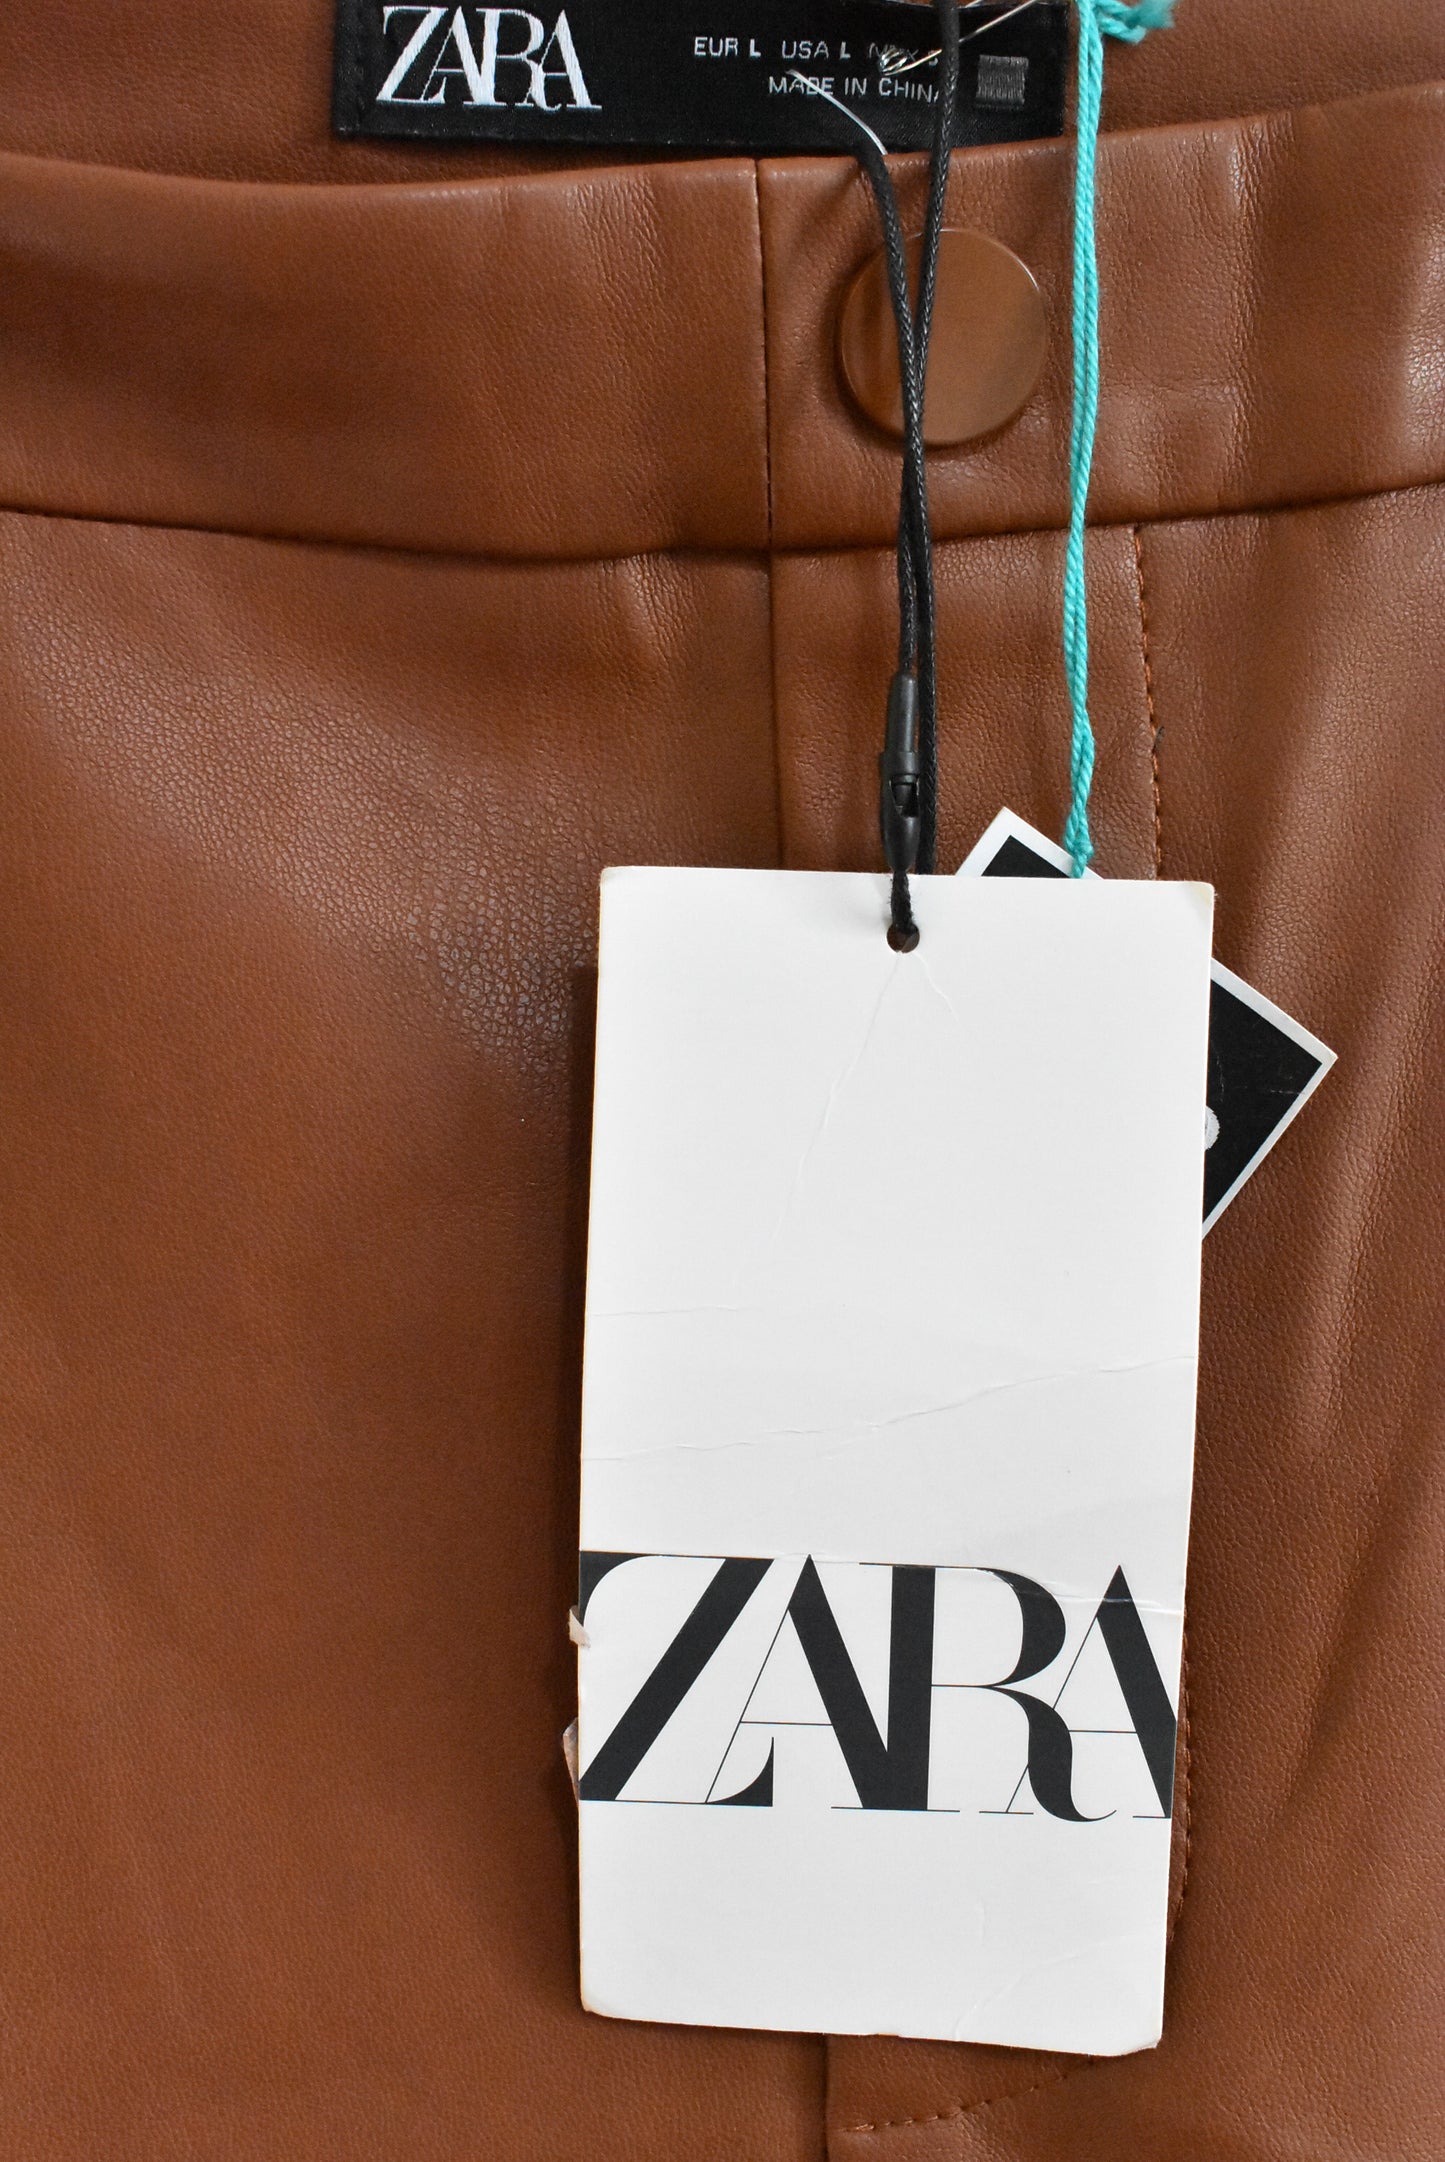 Zara polyester leggings, rich brown, L (NWT)